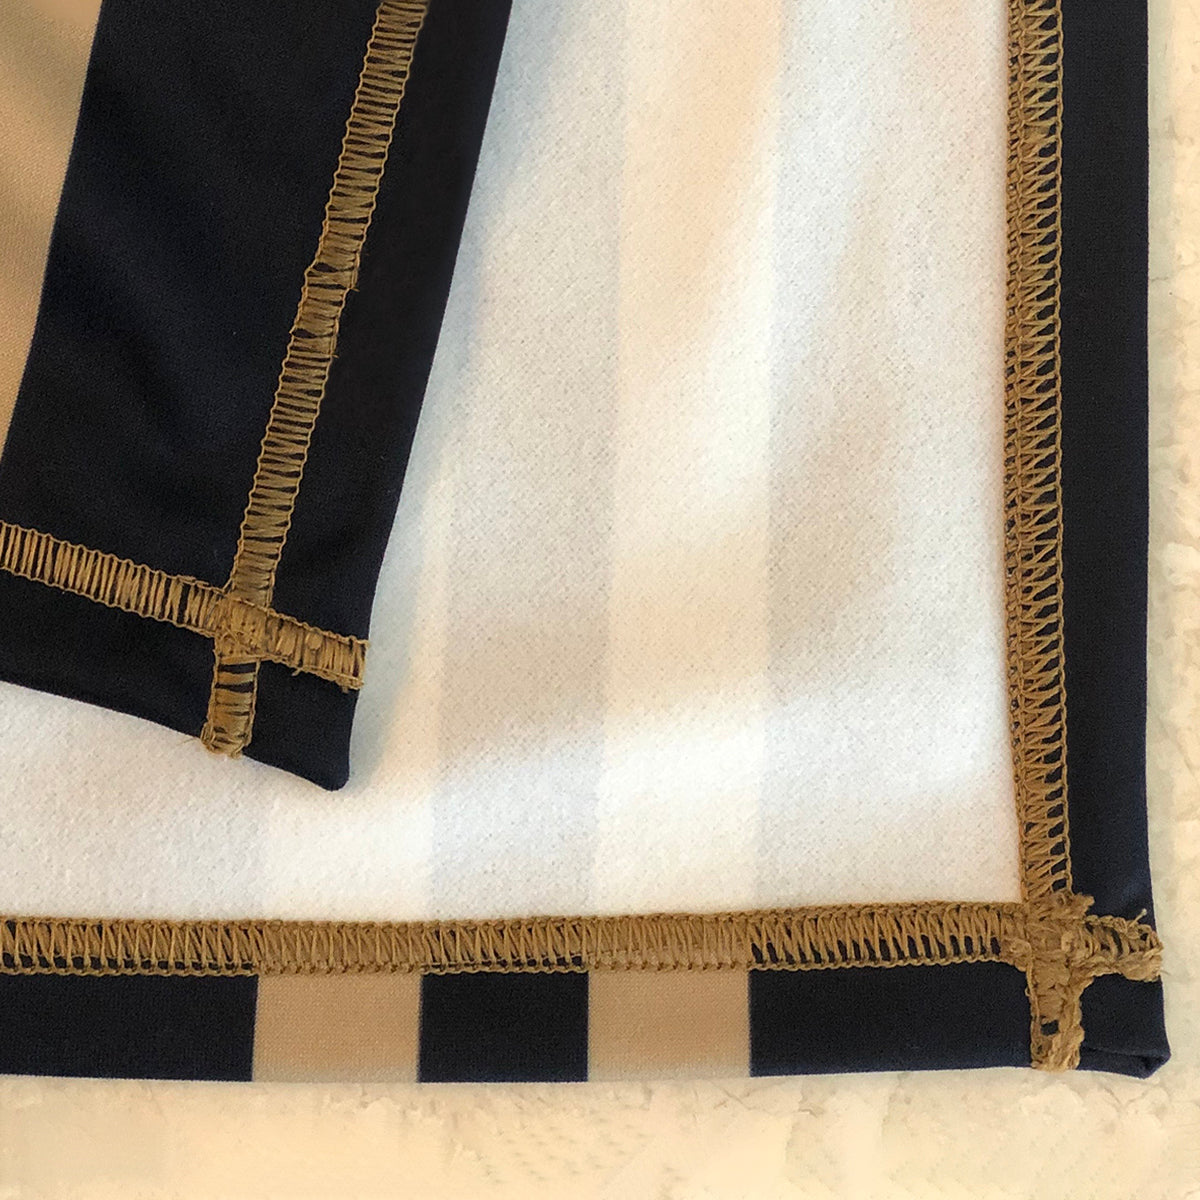 Alcorn State University Braves Game Day Soft Premium Fleece Black Throw Blanket 40 x 58 Logo & Stripes